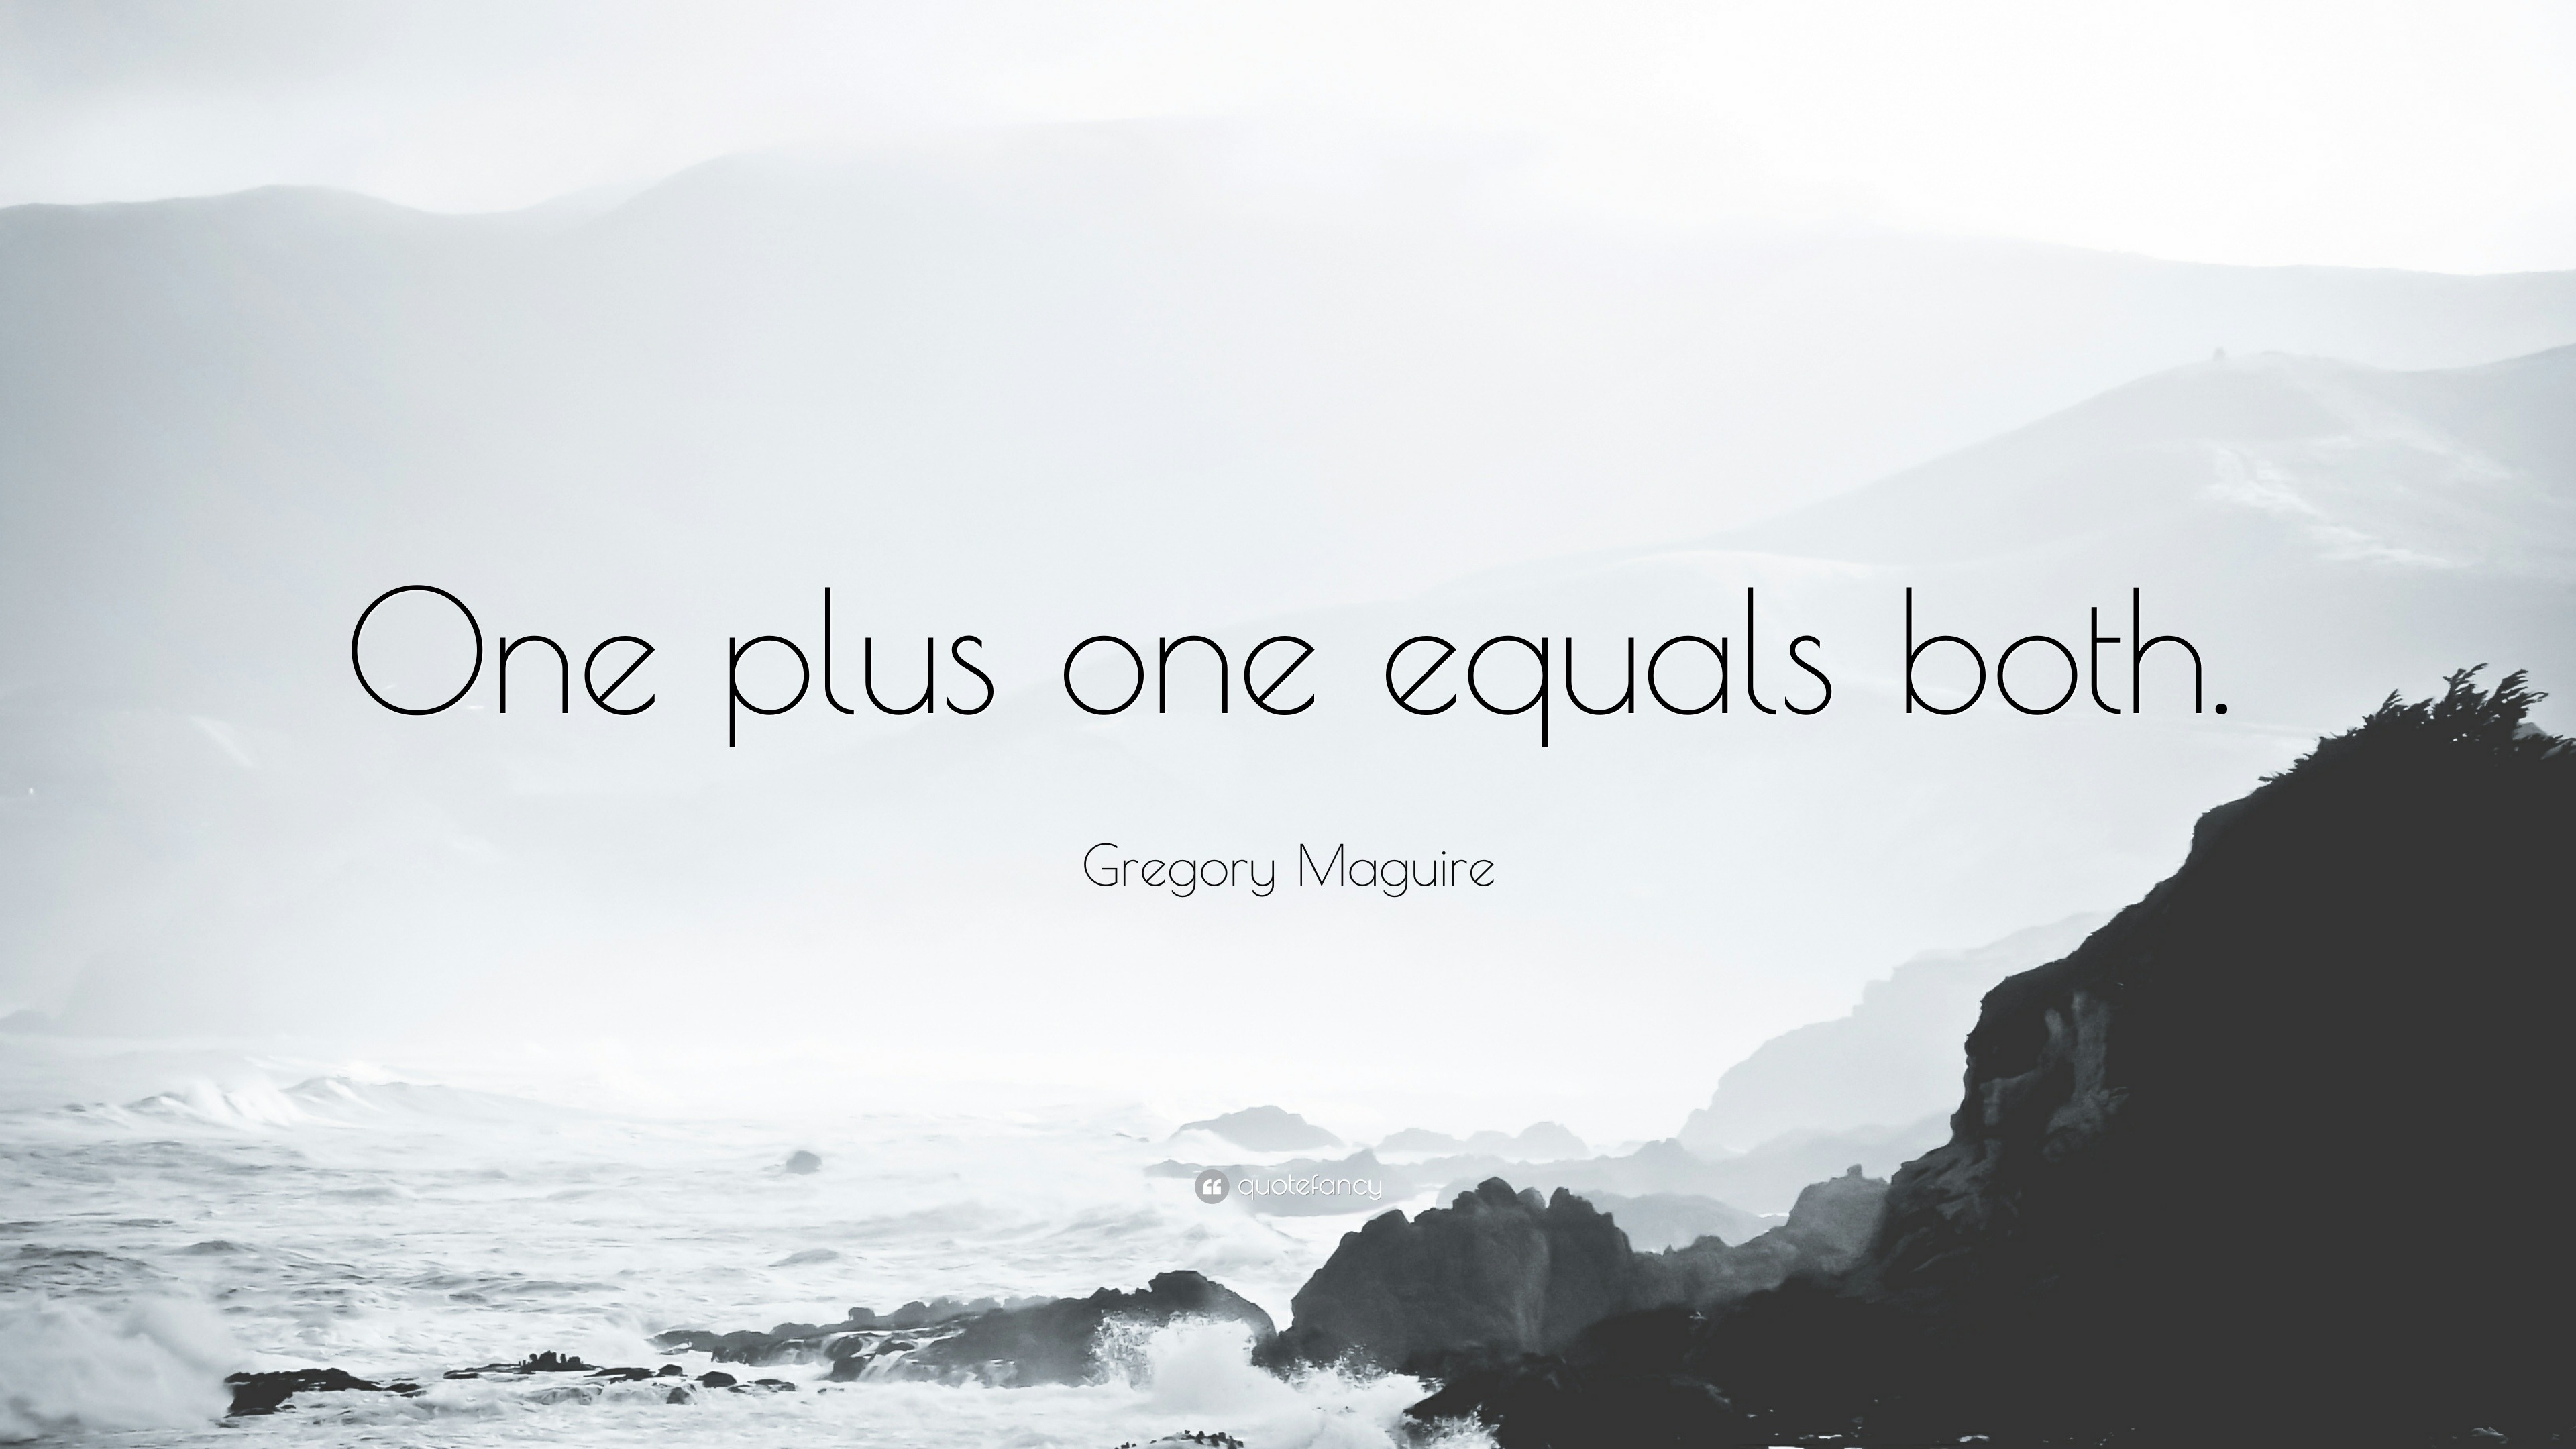 Maguire Quote: “One plus equals both.”